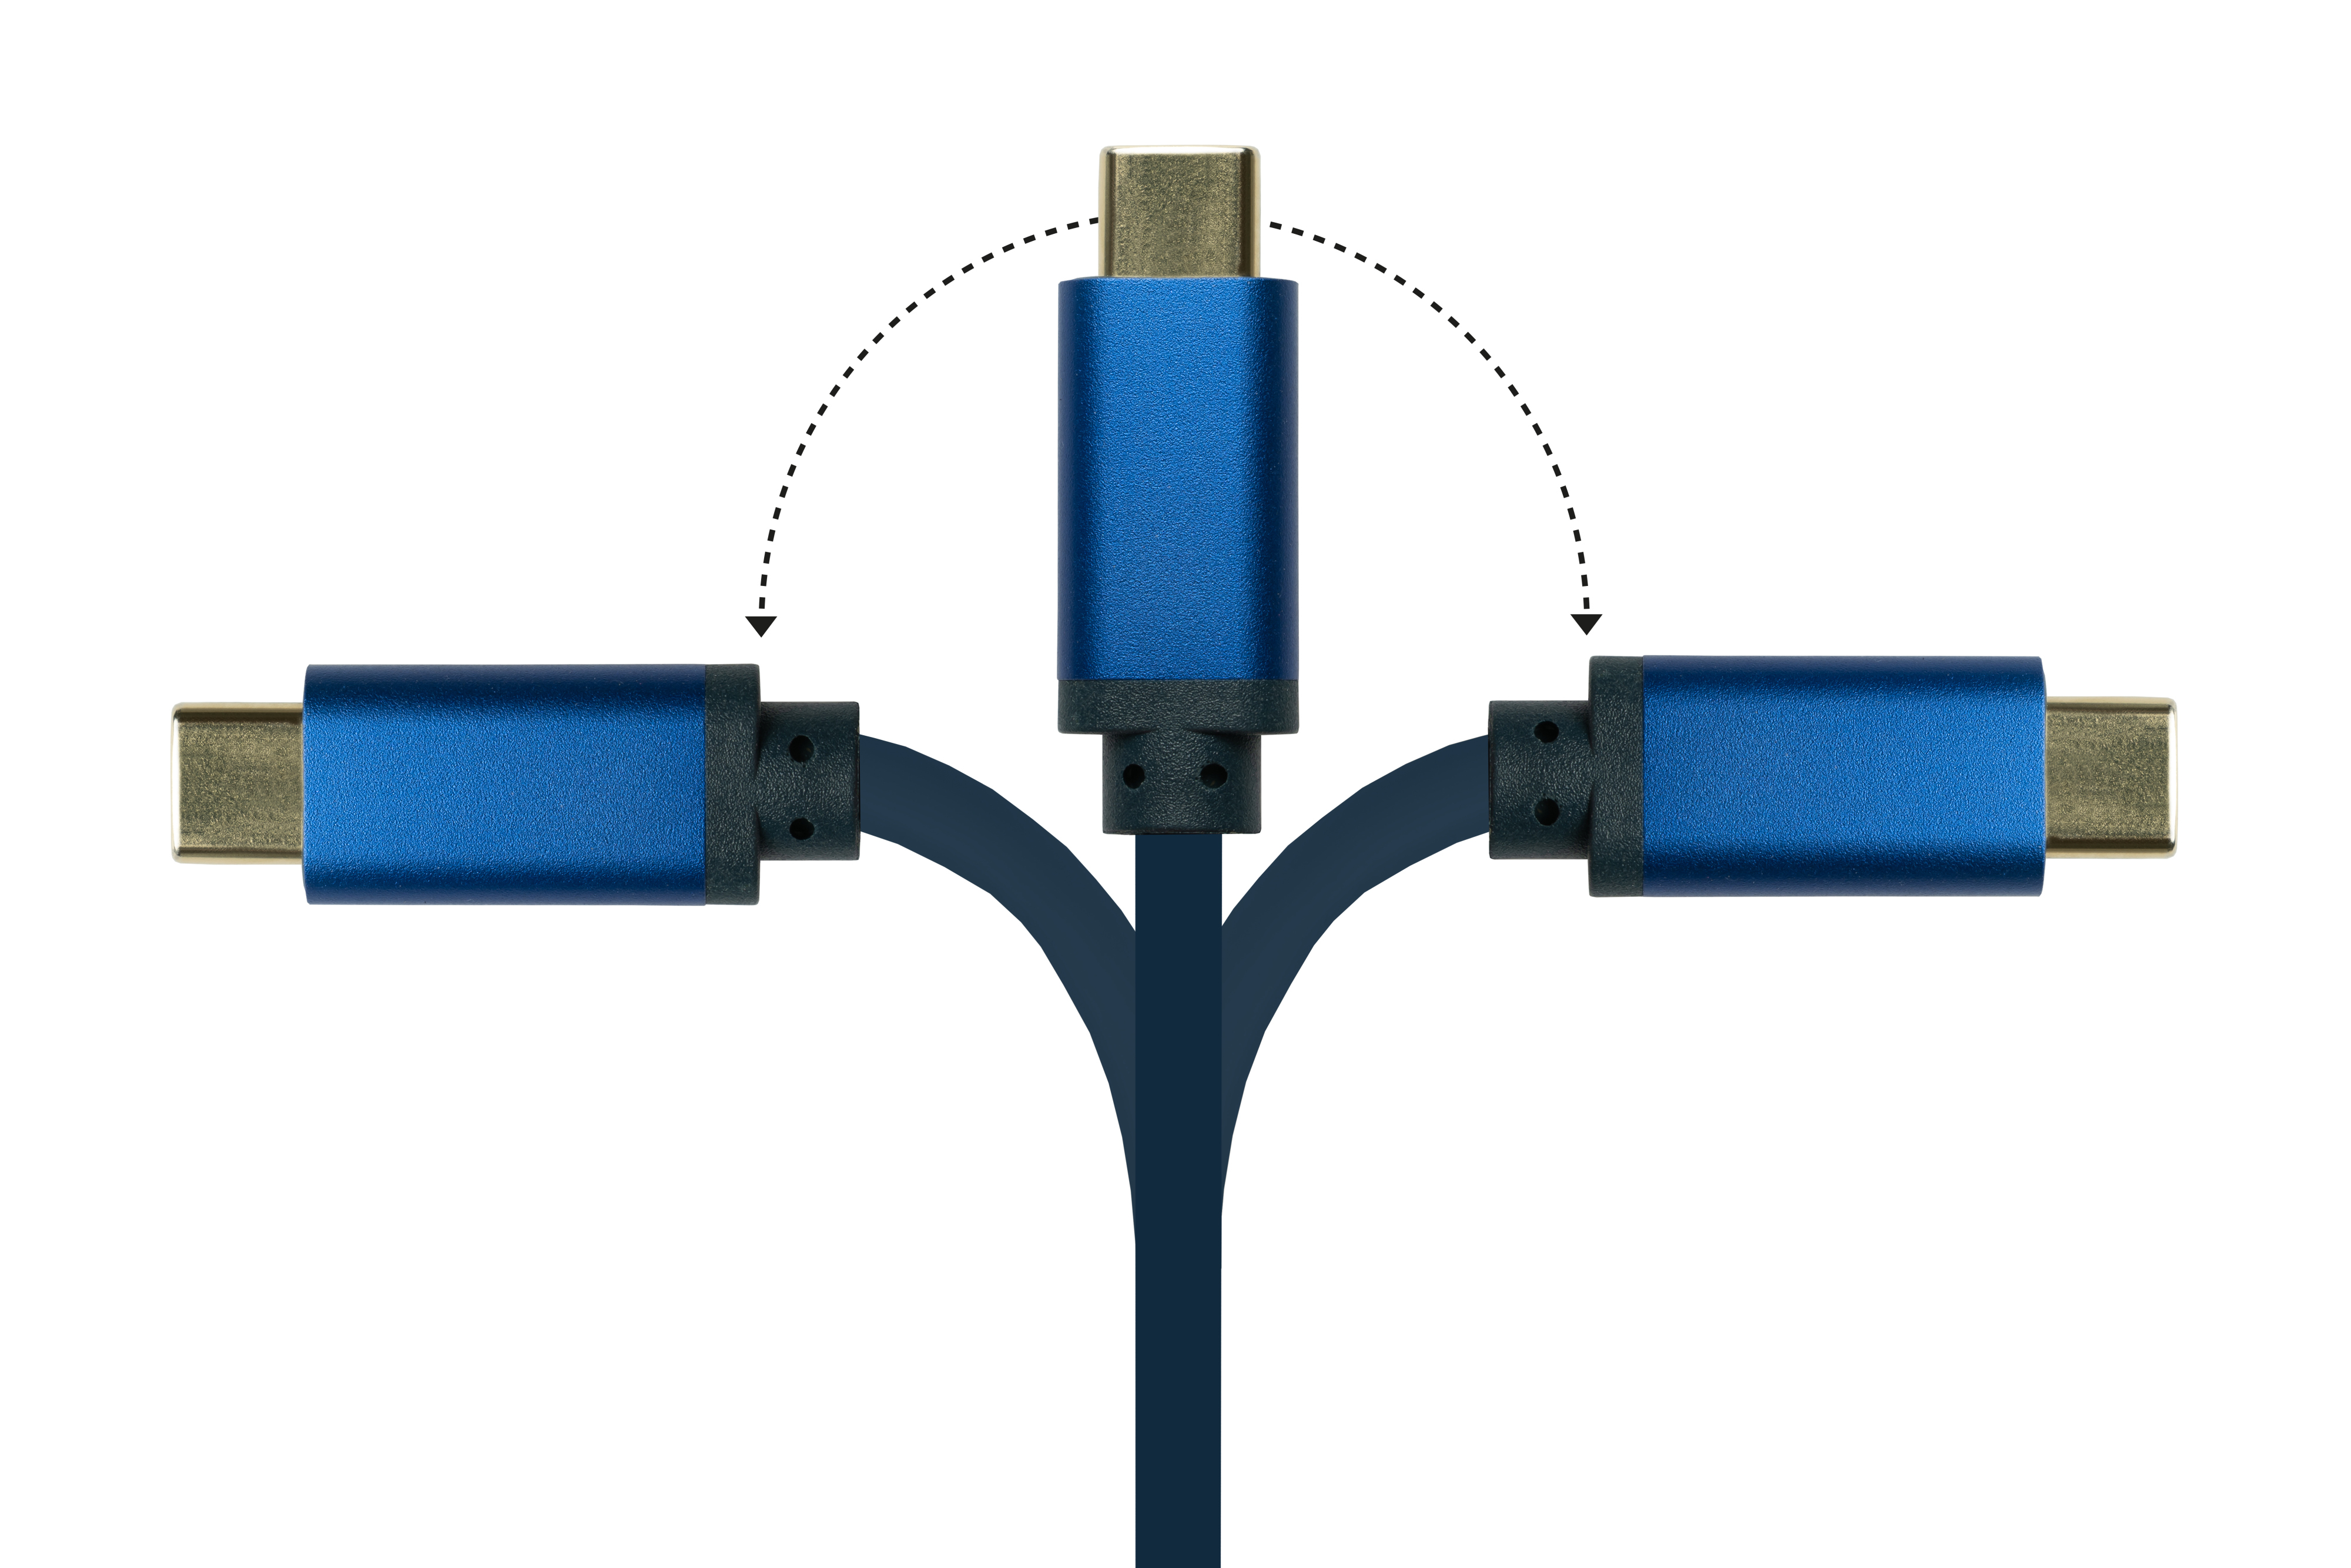 SmartFLEX an Kabel, HDMI 2.0b Adapterkabel CONNECTIONS UHD CU, @60Hz, dunkelblau GOOD Aluminiumgehäuse, 4K USB-C™